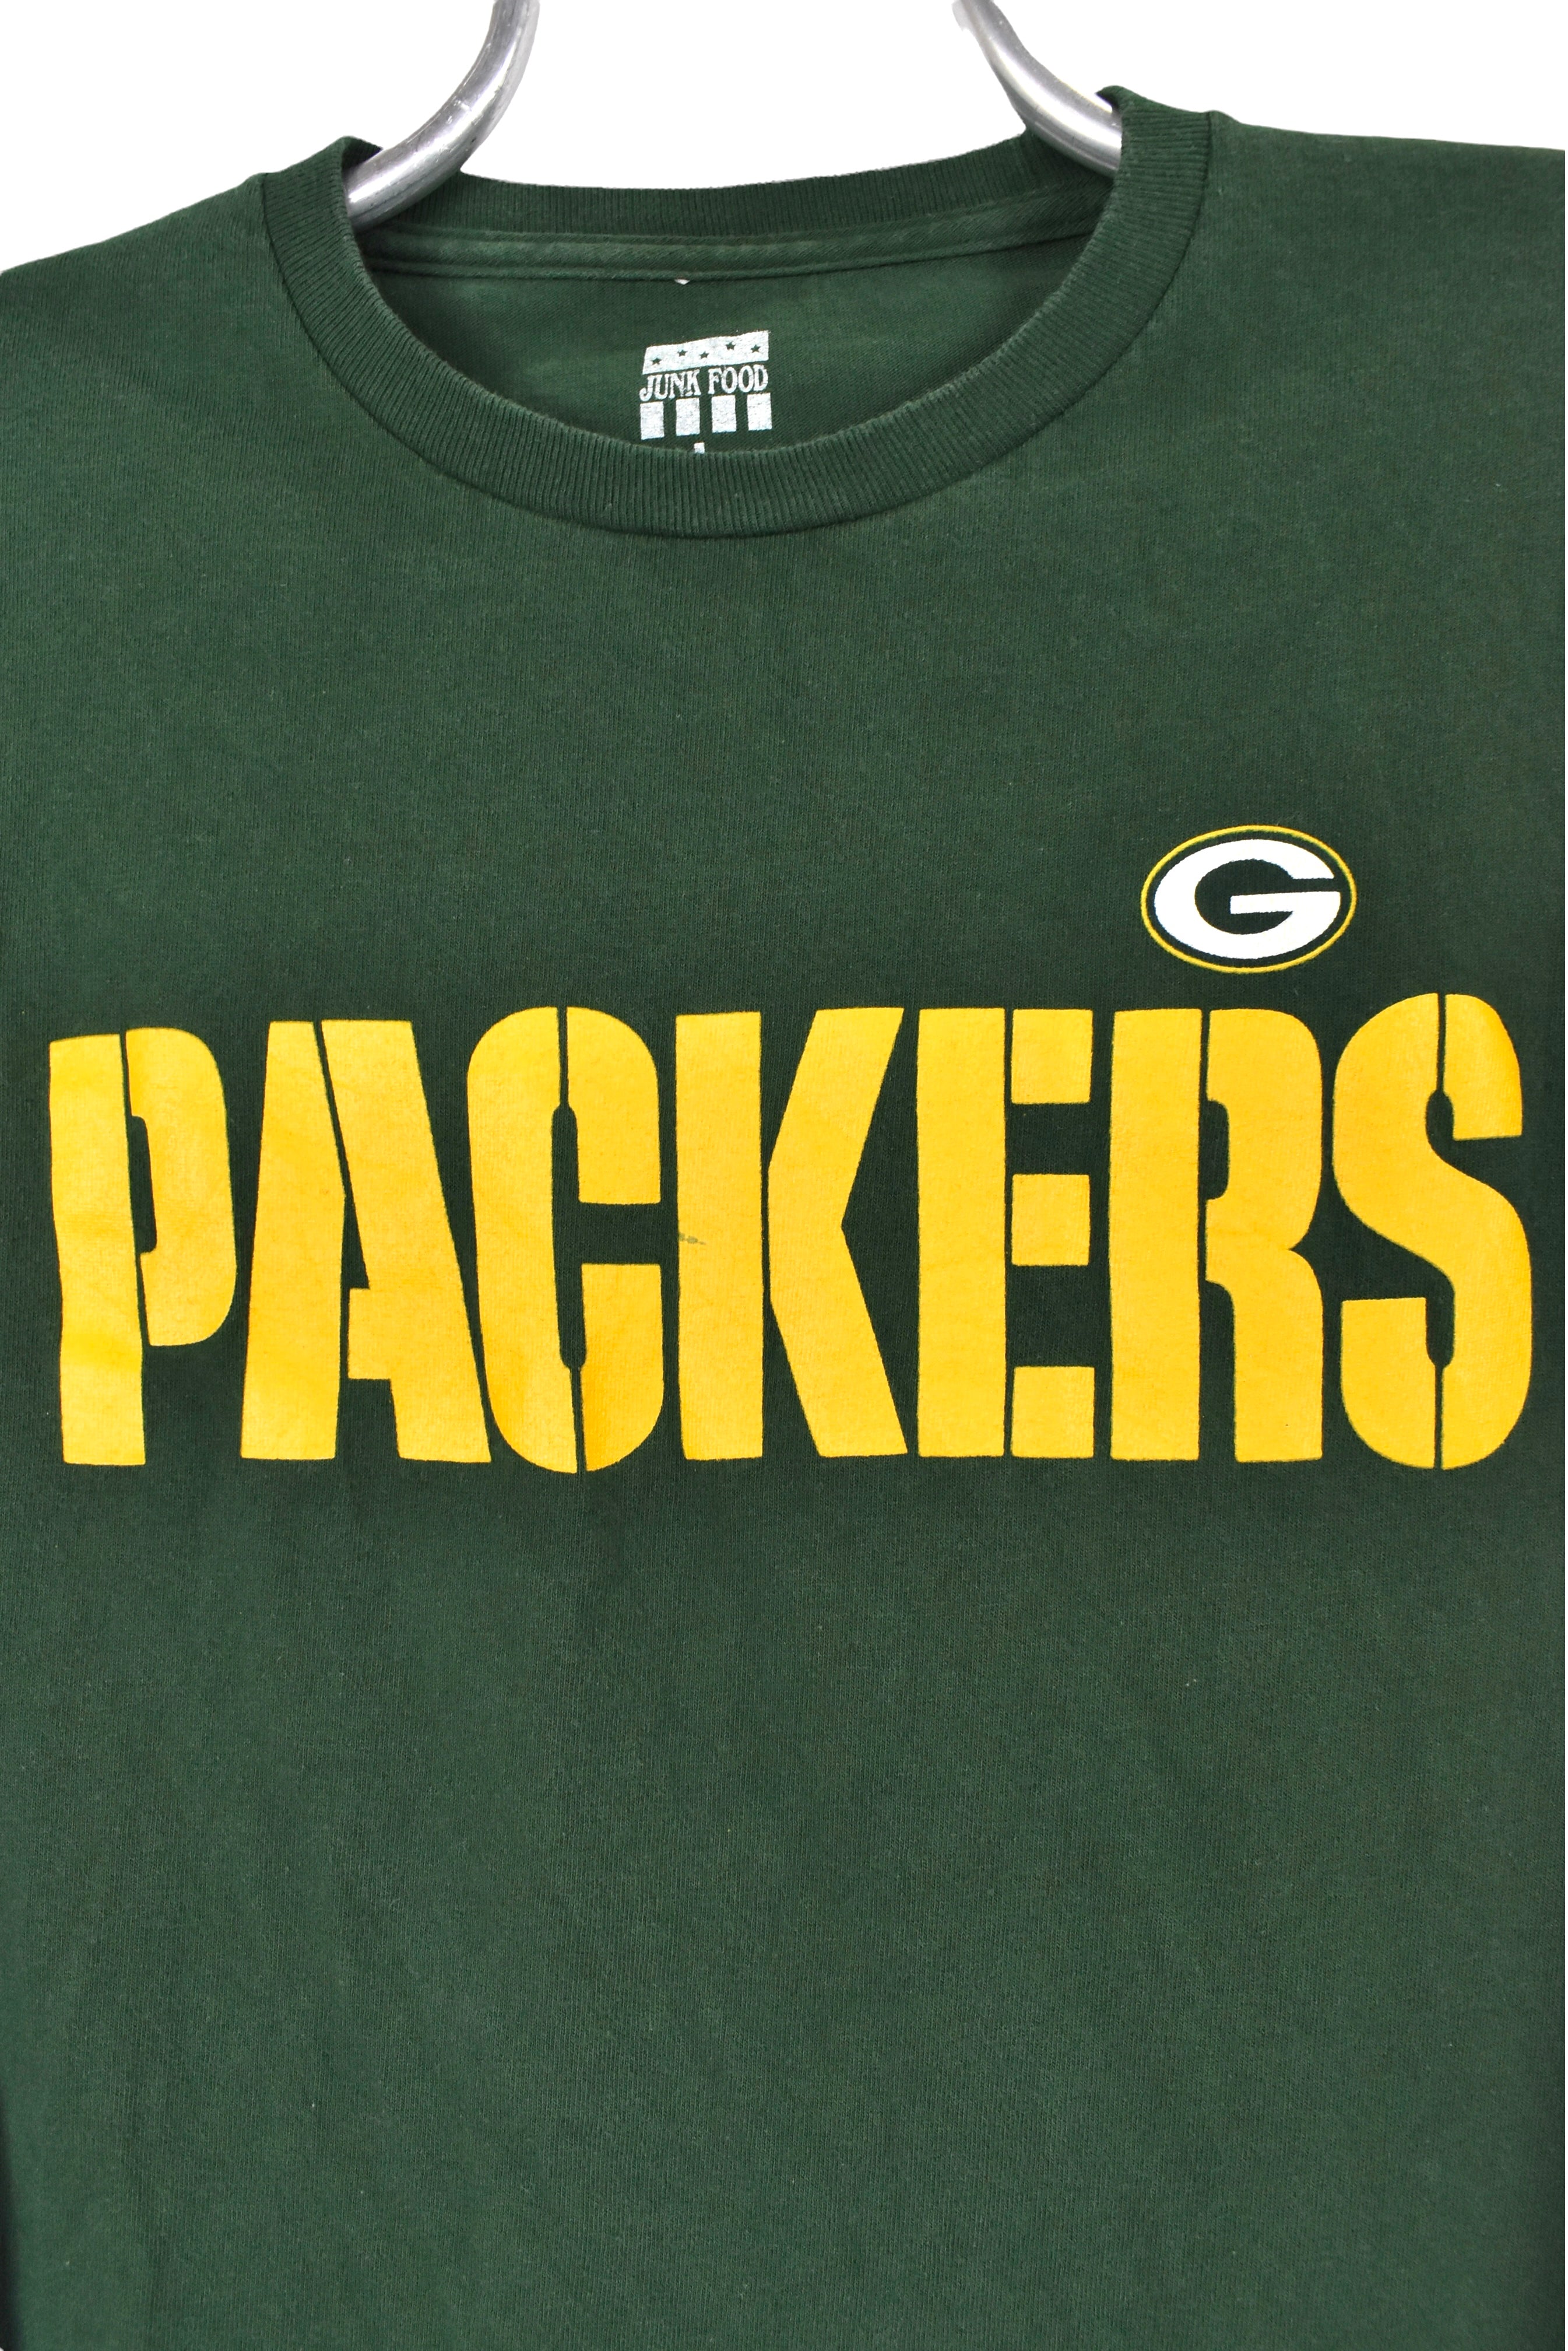 Vintage Green Bay Packers shirt, green long sleeve graphic tee - AU Medium PRO SPORT